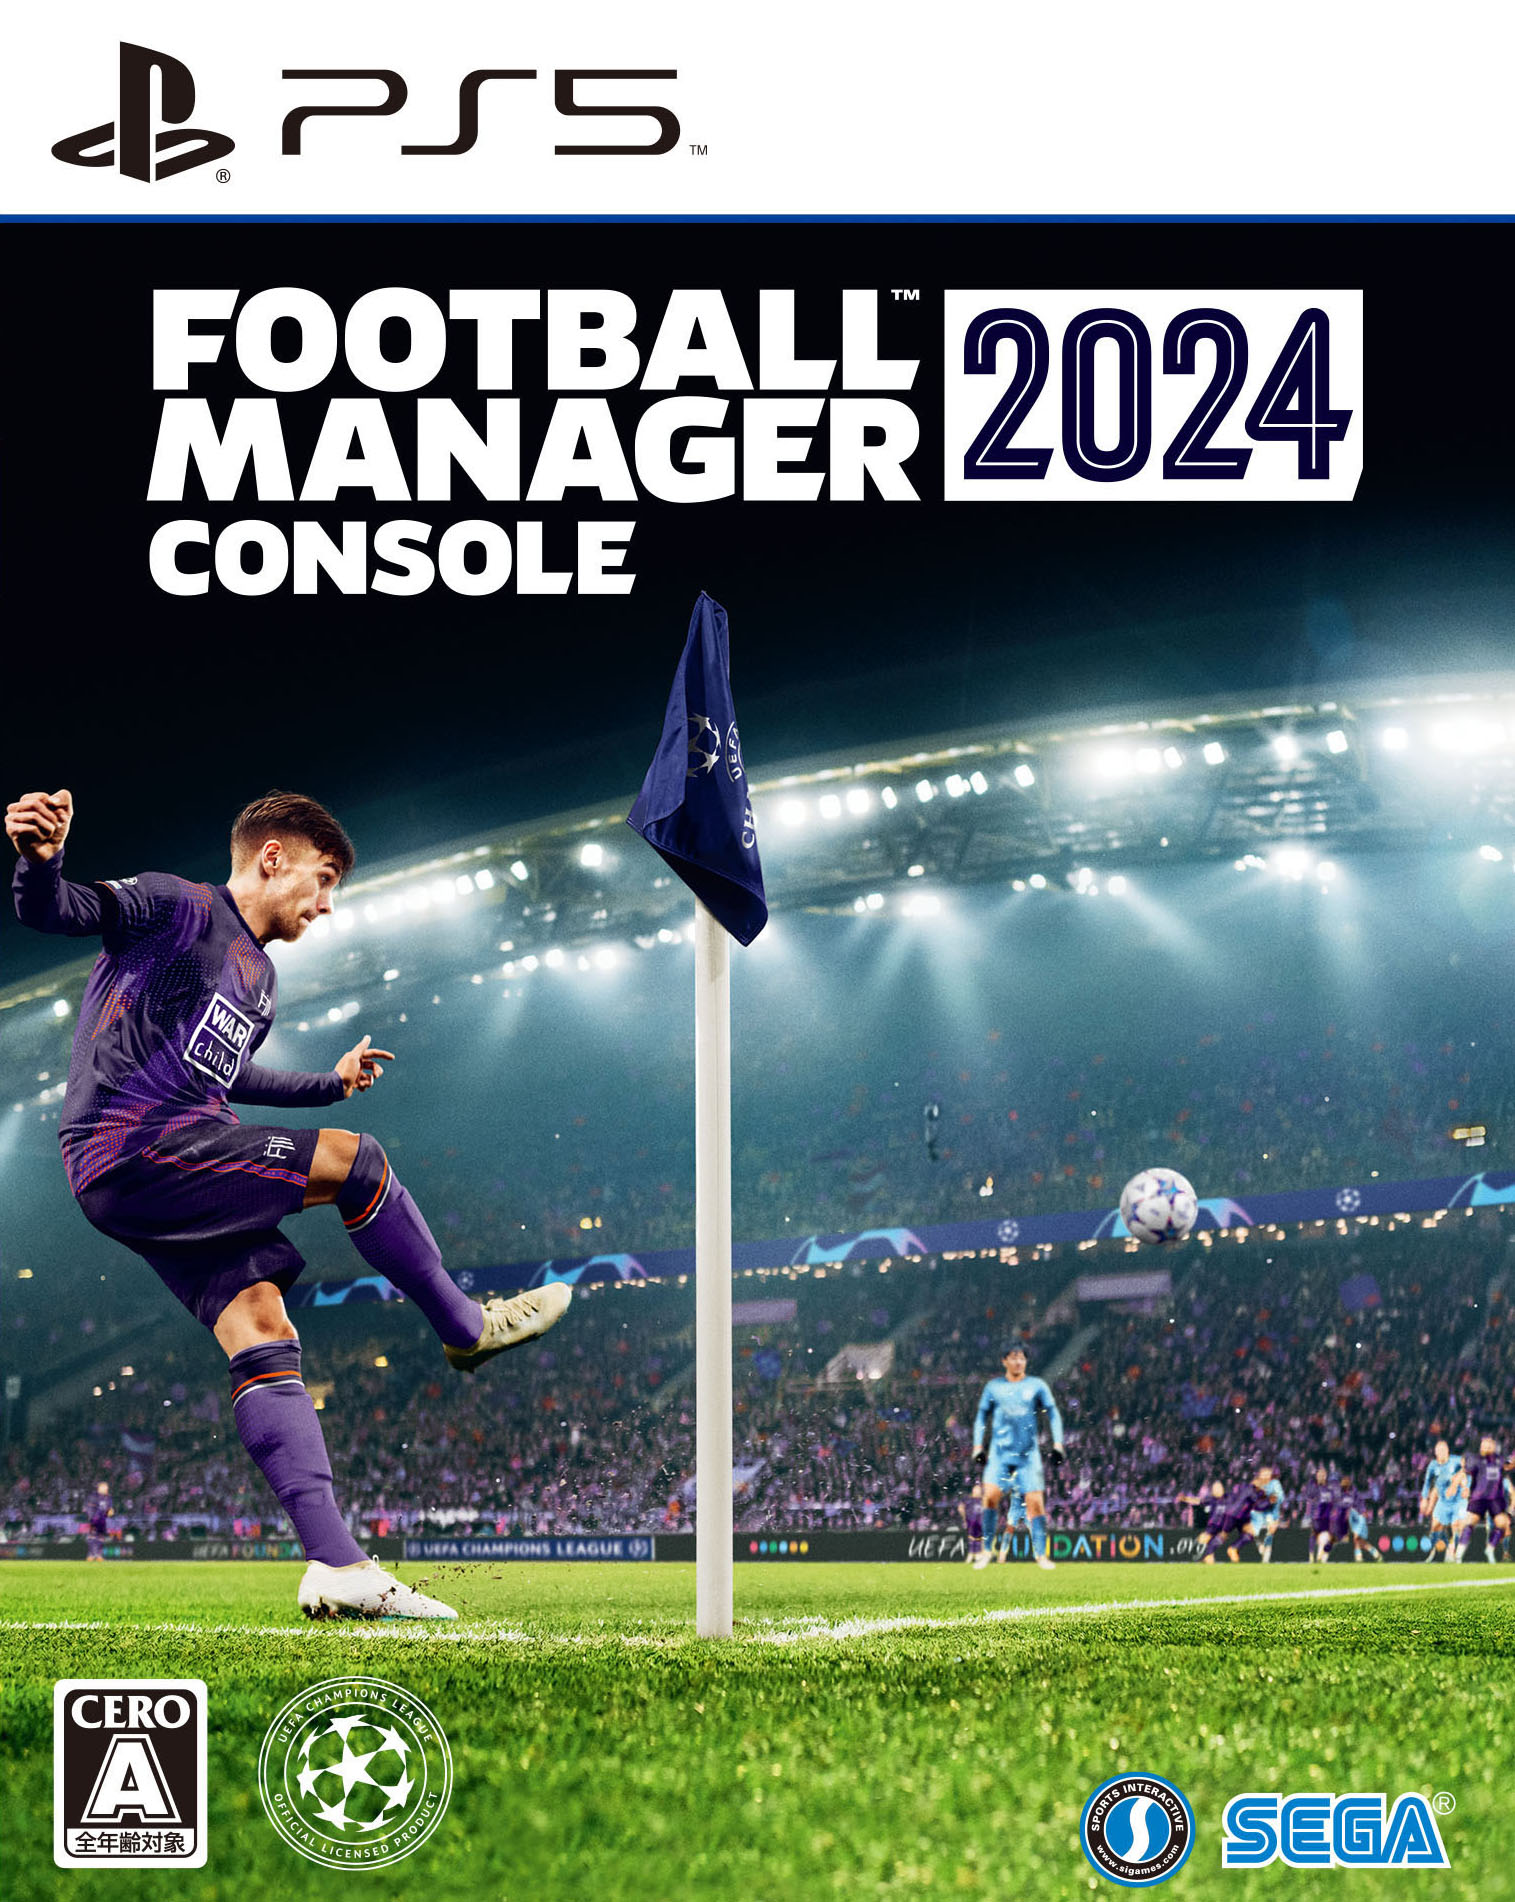 yÁzFootball Manager 2024 Console\tg:vCXe[V5\tg^X|[cEQ[